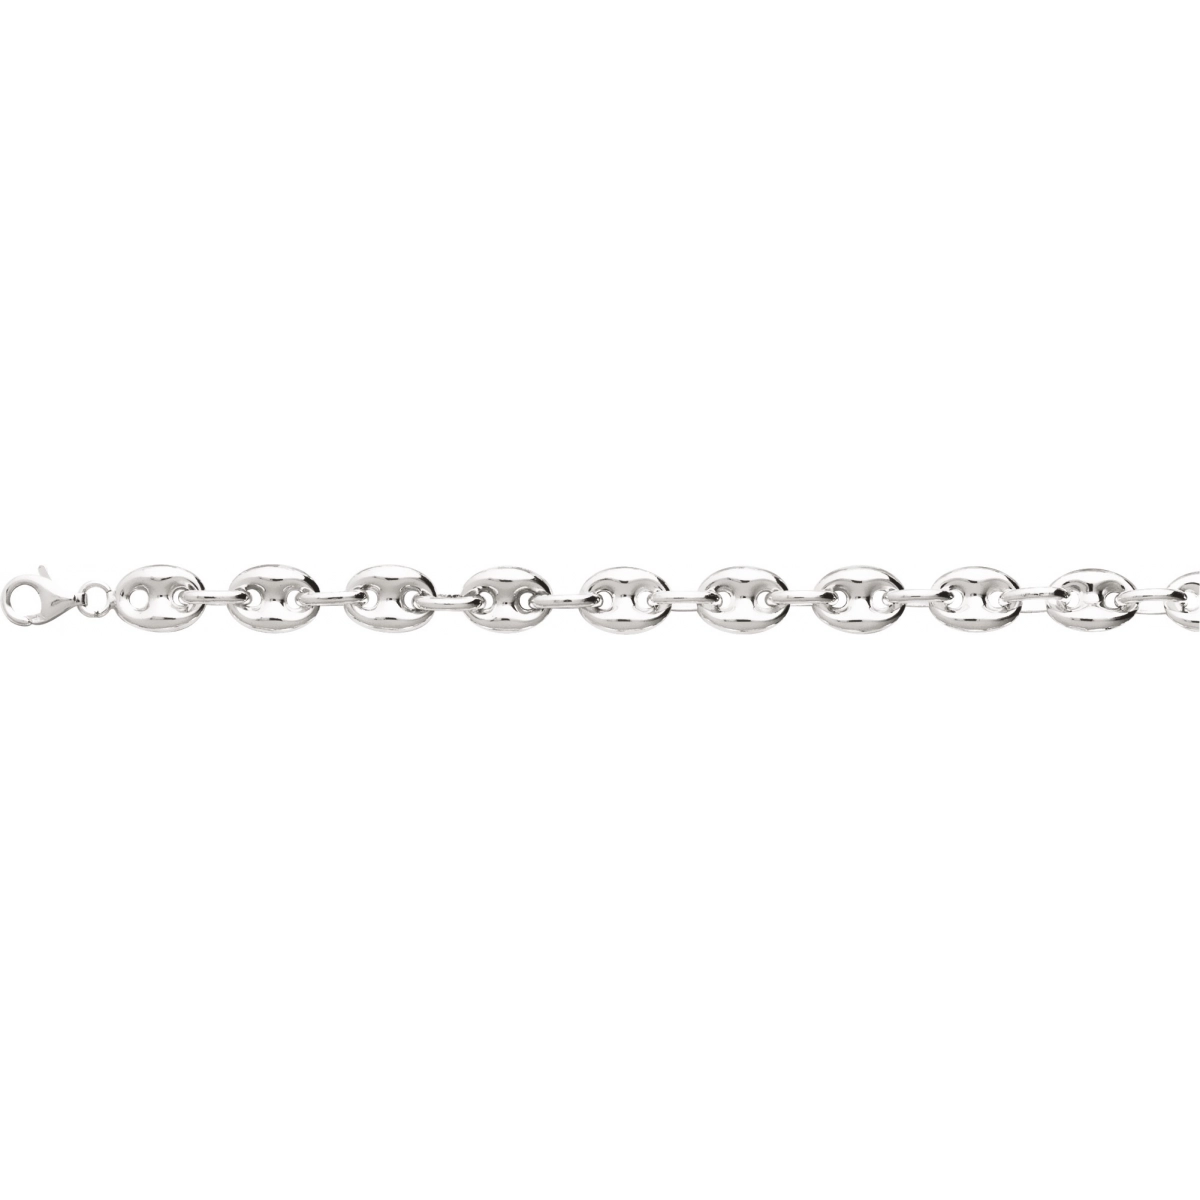 Bracelet 925 Silver Lua Blanca  324857I - Size 19